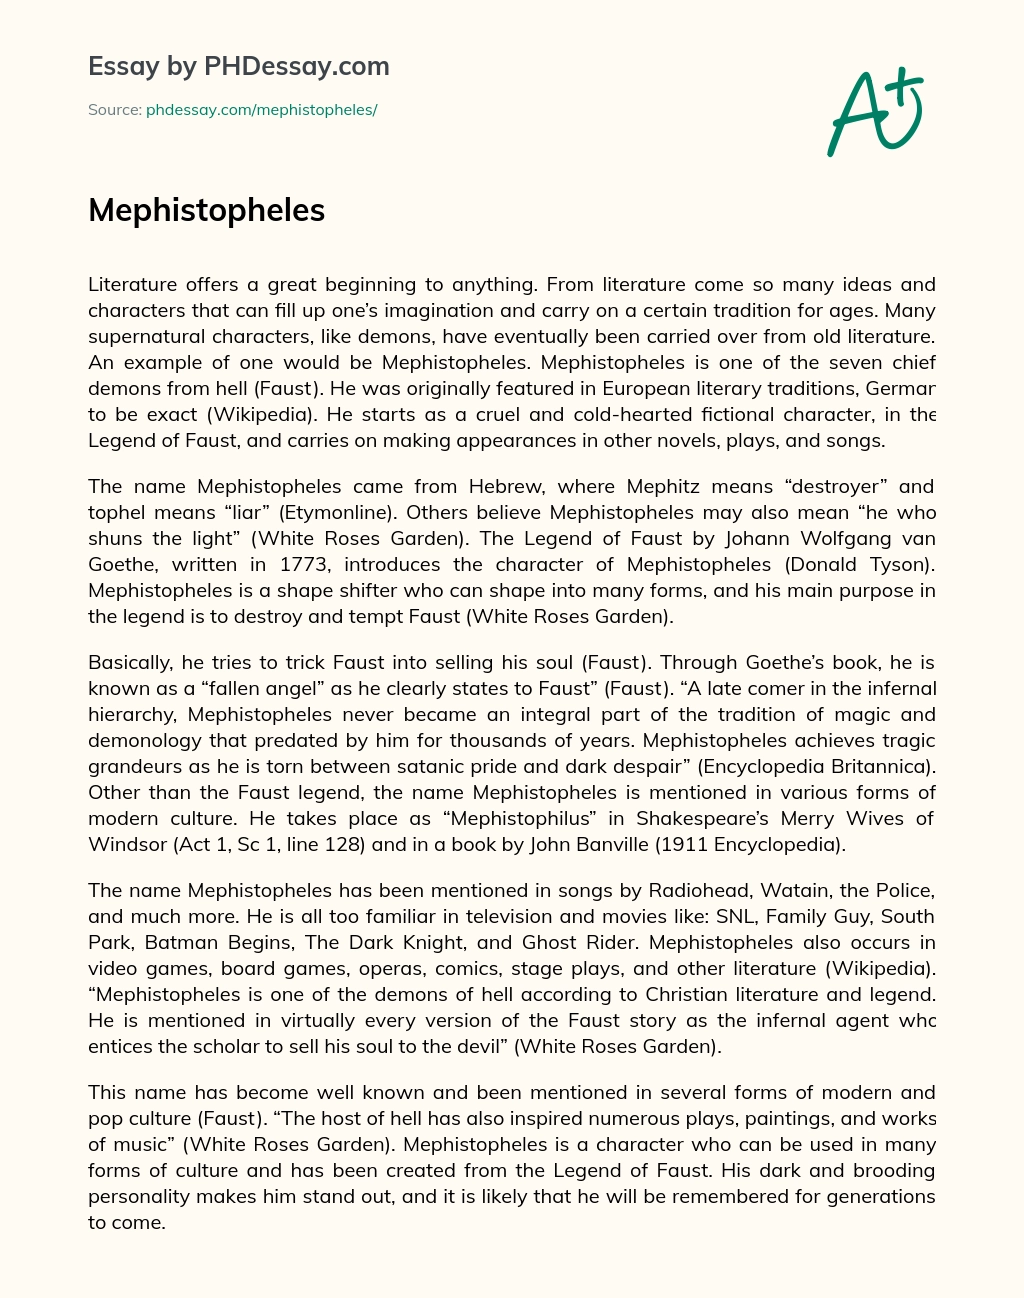 Mephistopheles essay